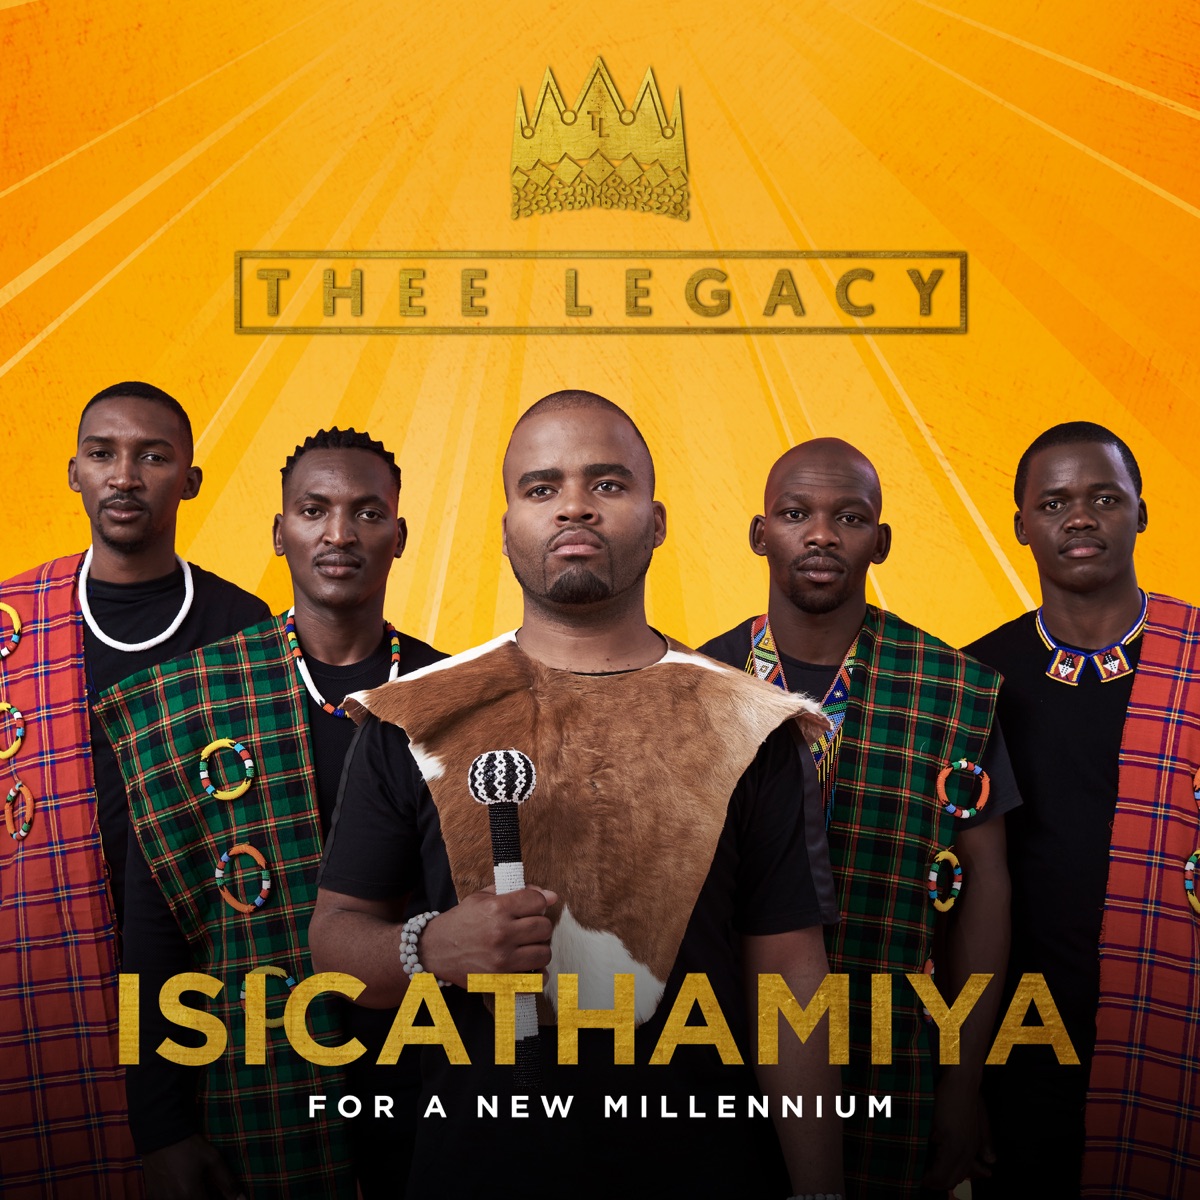 MP3: Thee Legacy – Ngilosi Yam